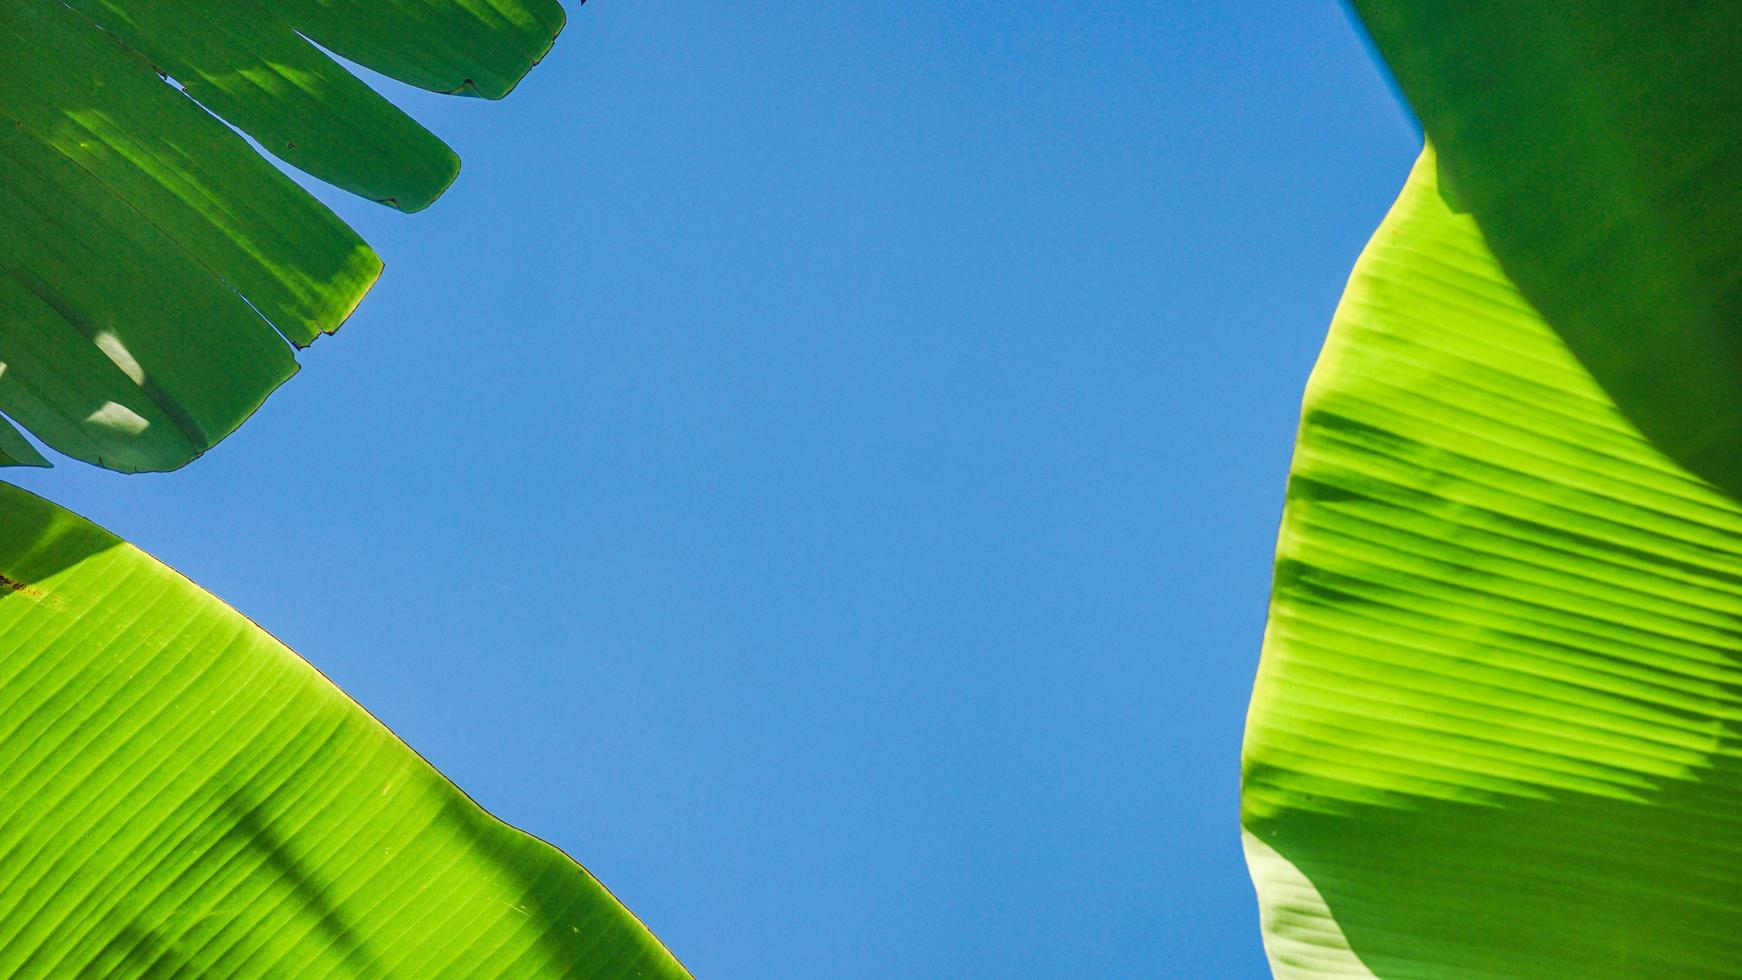 fond de feuille de bananier texturé avec ciel bleu vif photo